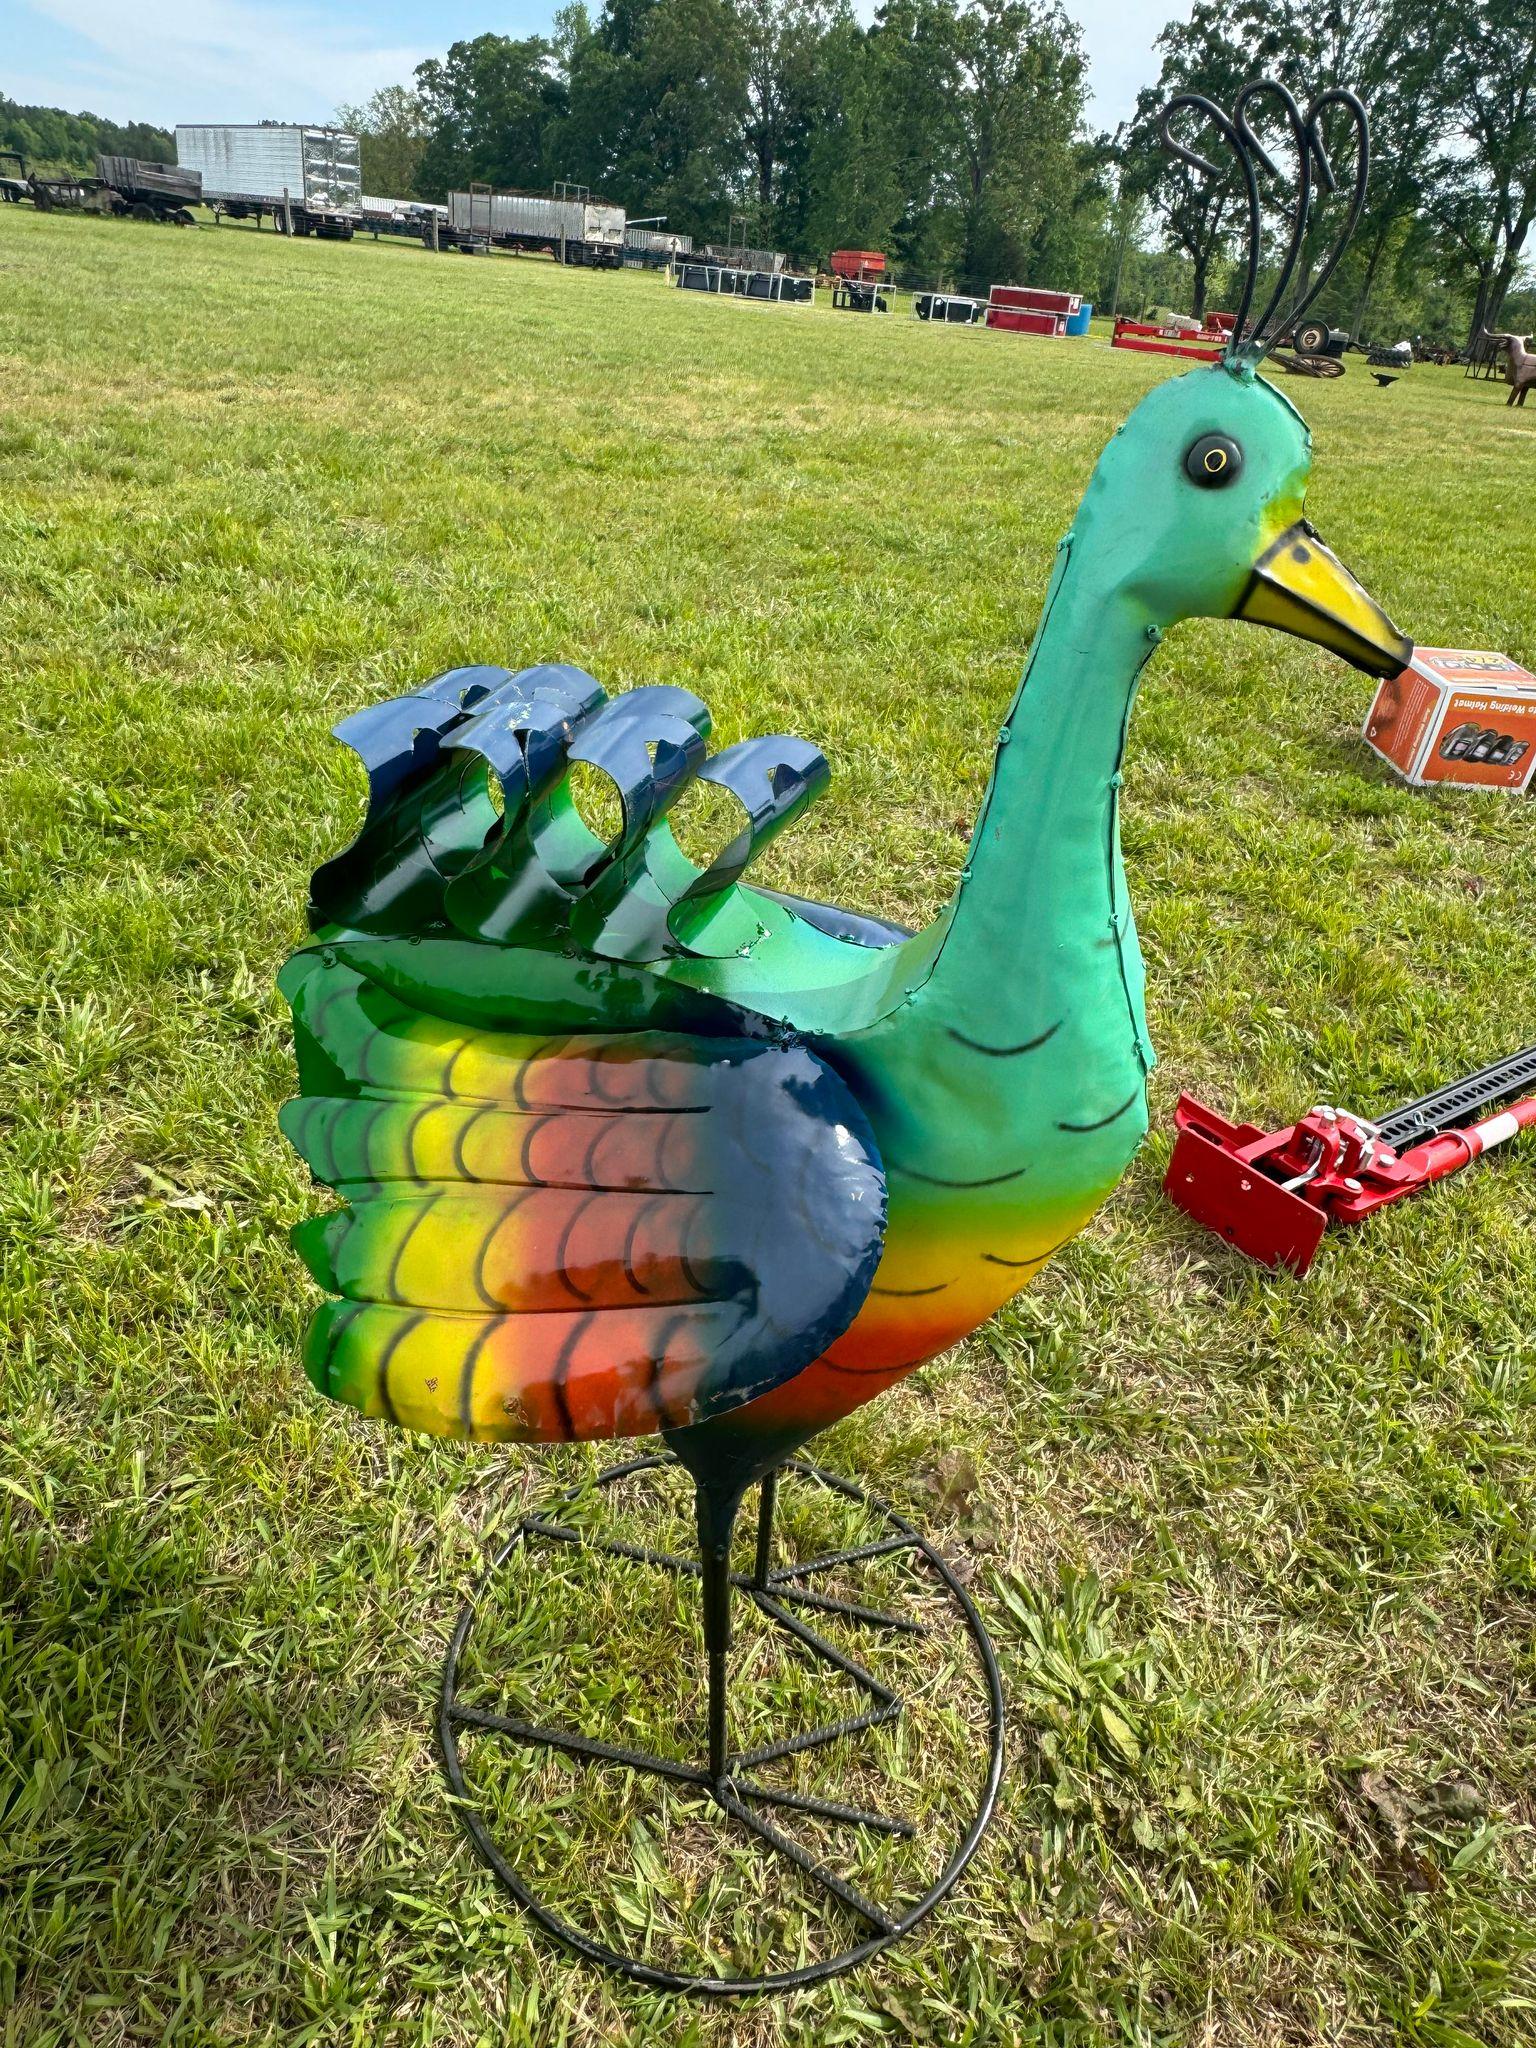 Peacock art